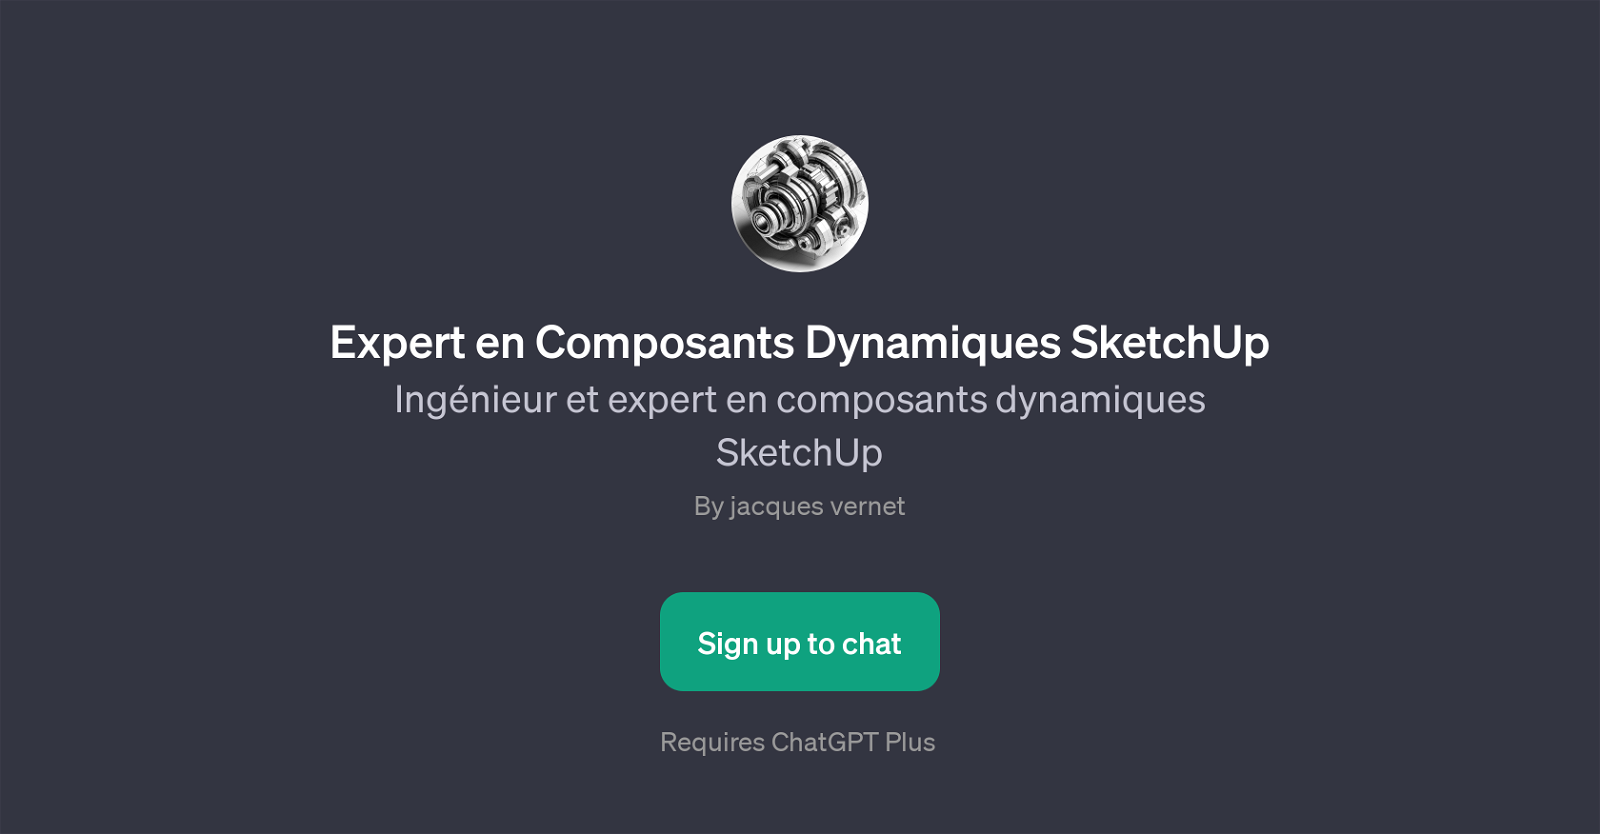 Expert en Composants Dynamiques SketchUp website